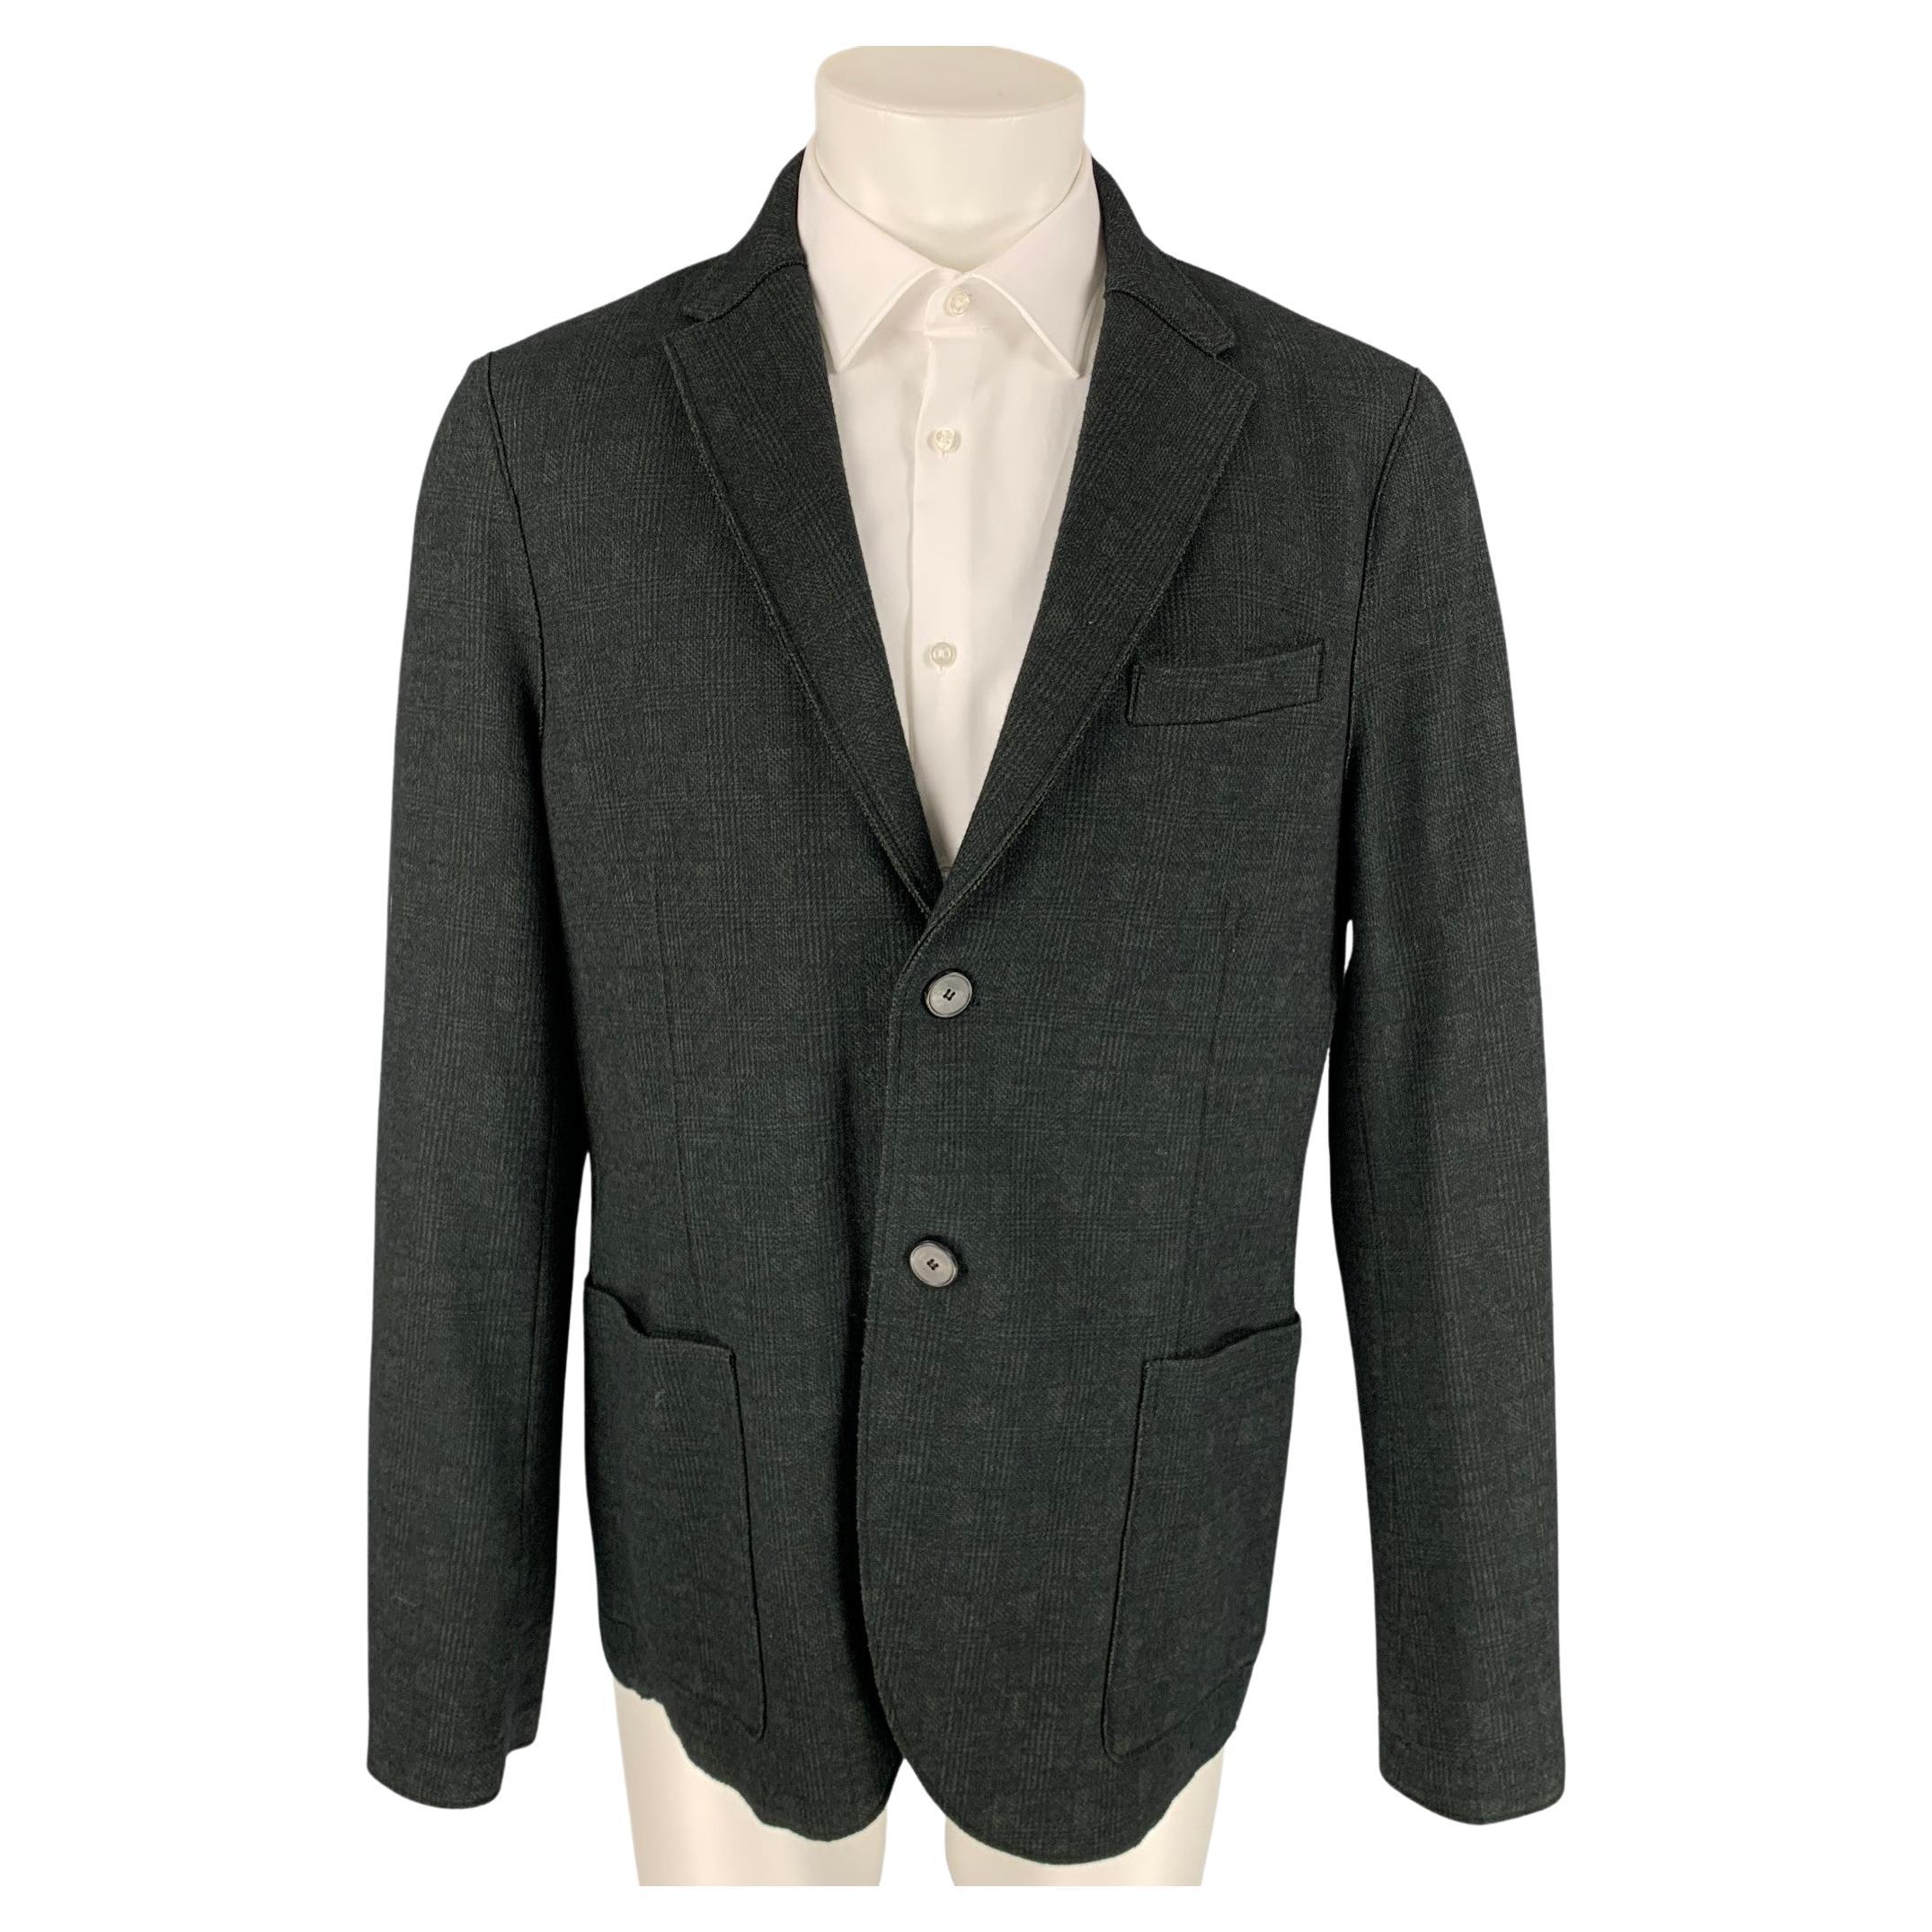 HARRIS WHARF LONDON Size 44 Green & Black Plaid Wool / Cotton Sport Coat